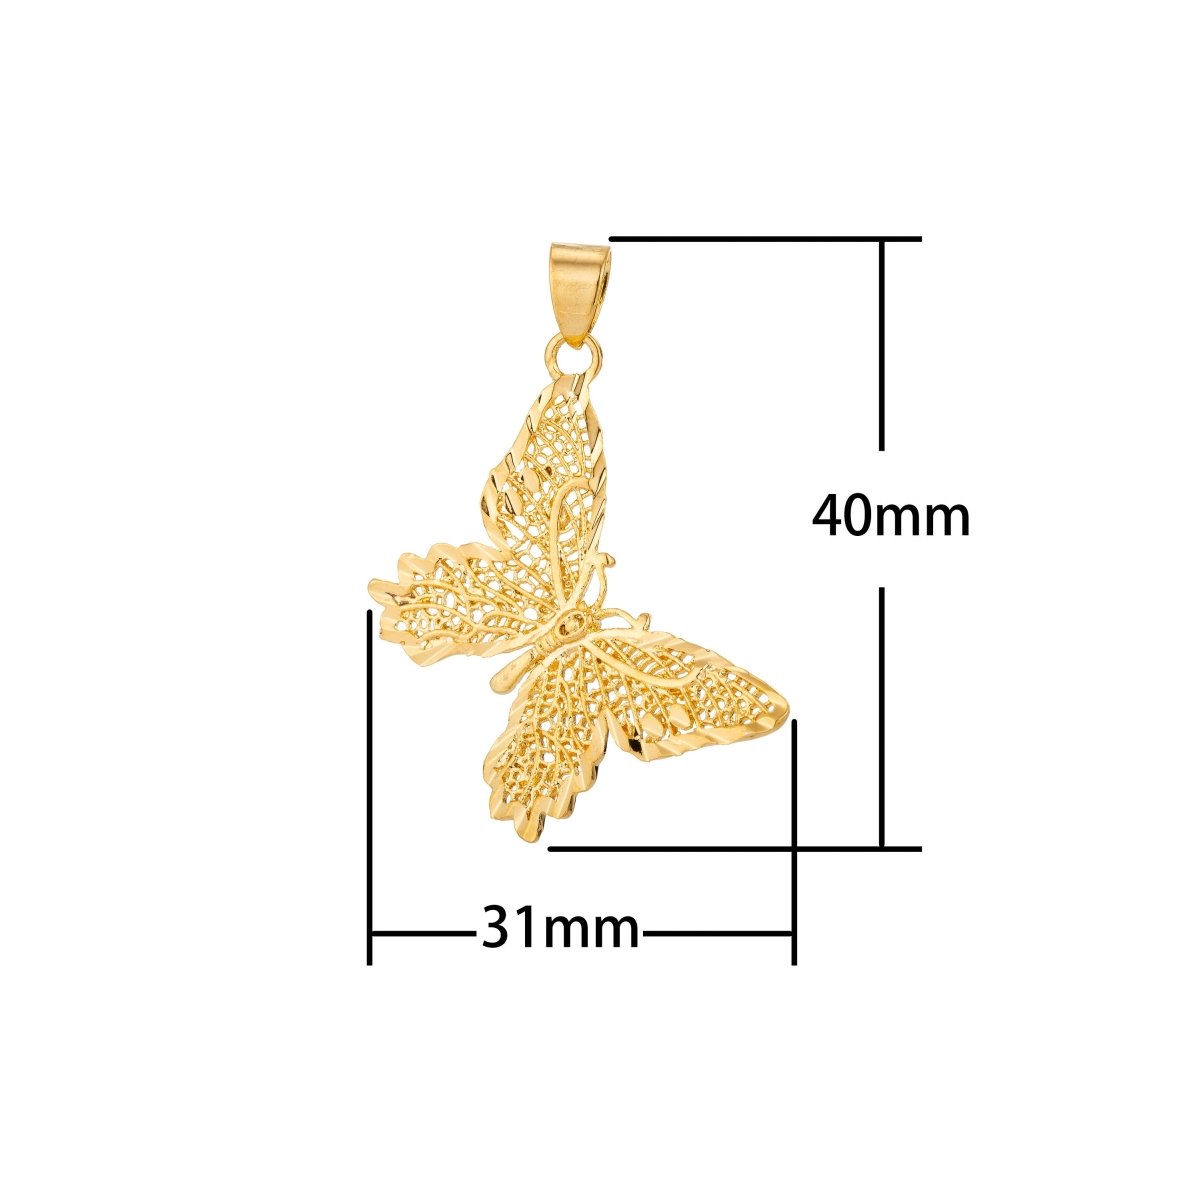 Filgree Monarch Butterfly Pendant in 18k Gold Fiill Butterfly charm for Necklace Earring Jewelry Making H-821 - DLUXCA